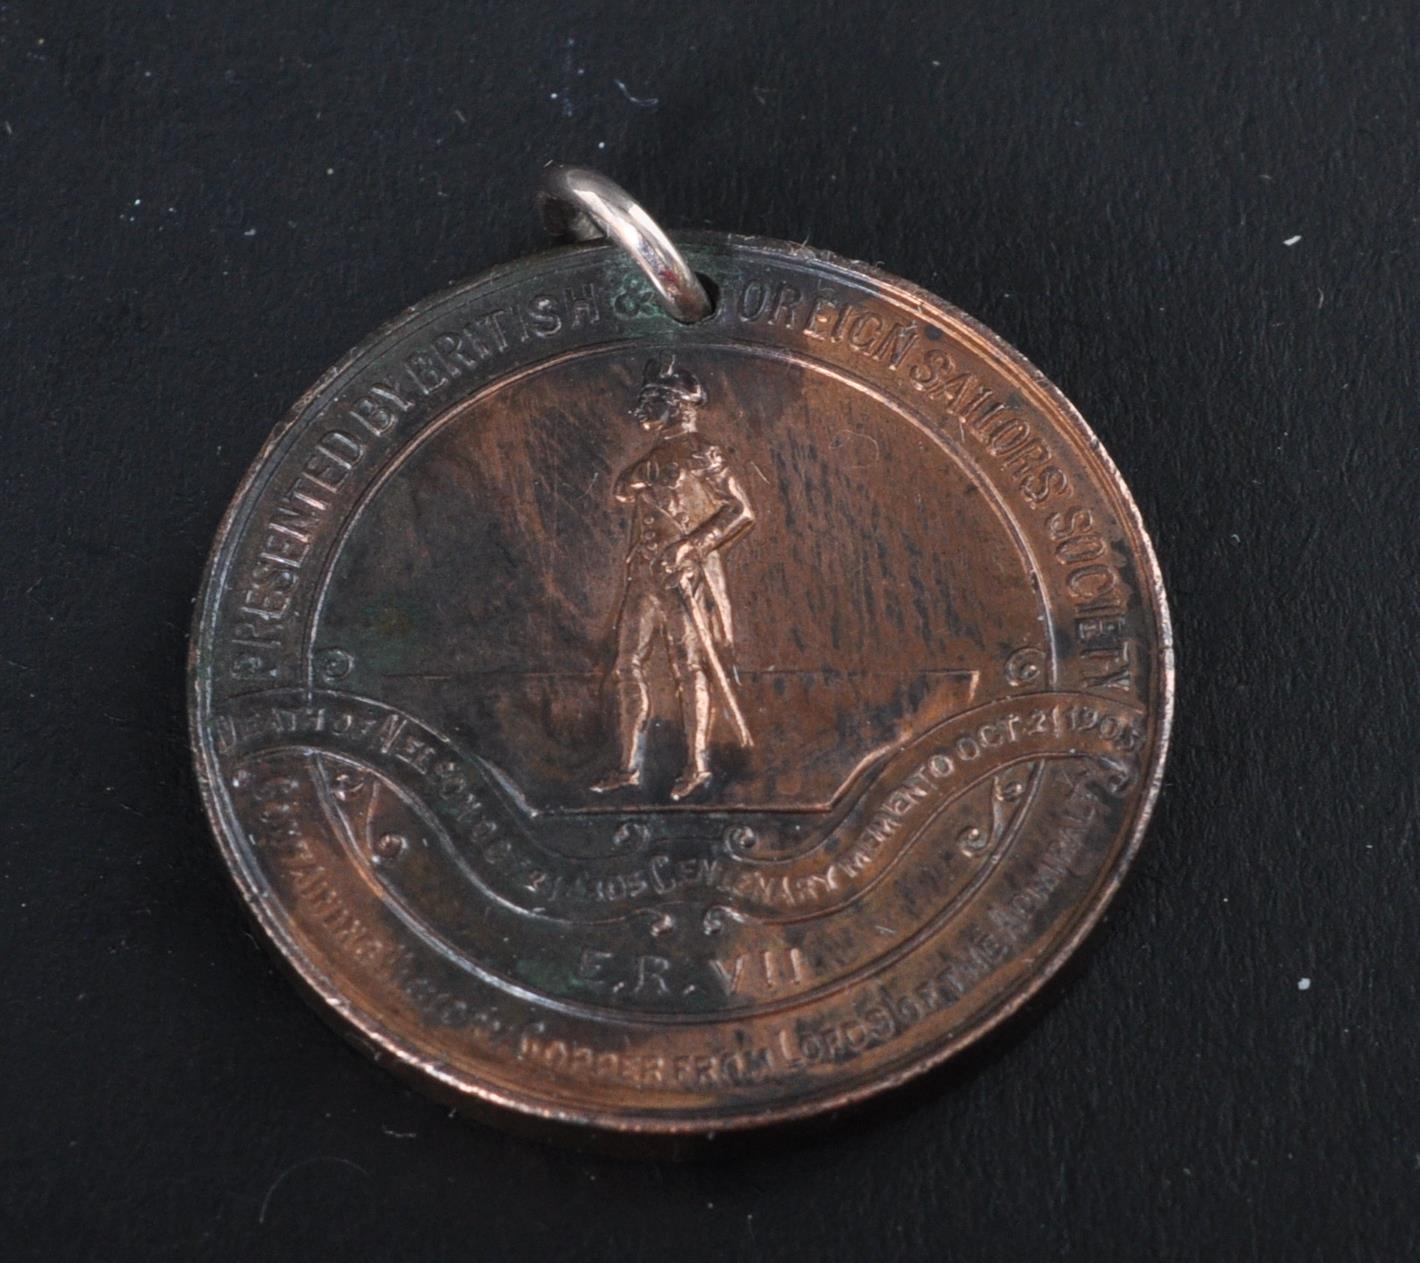 1905 BATTLE OF TRAFALGAR COIN - Image 2 of 2